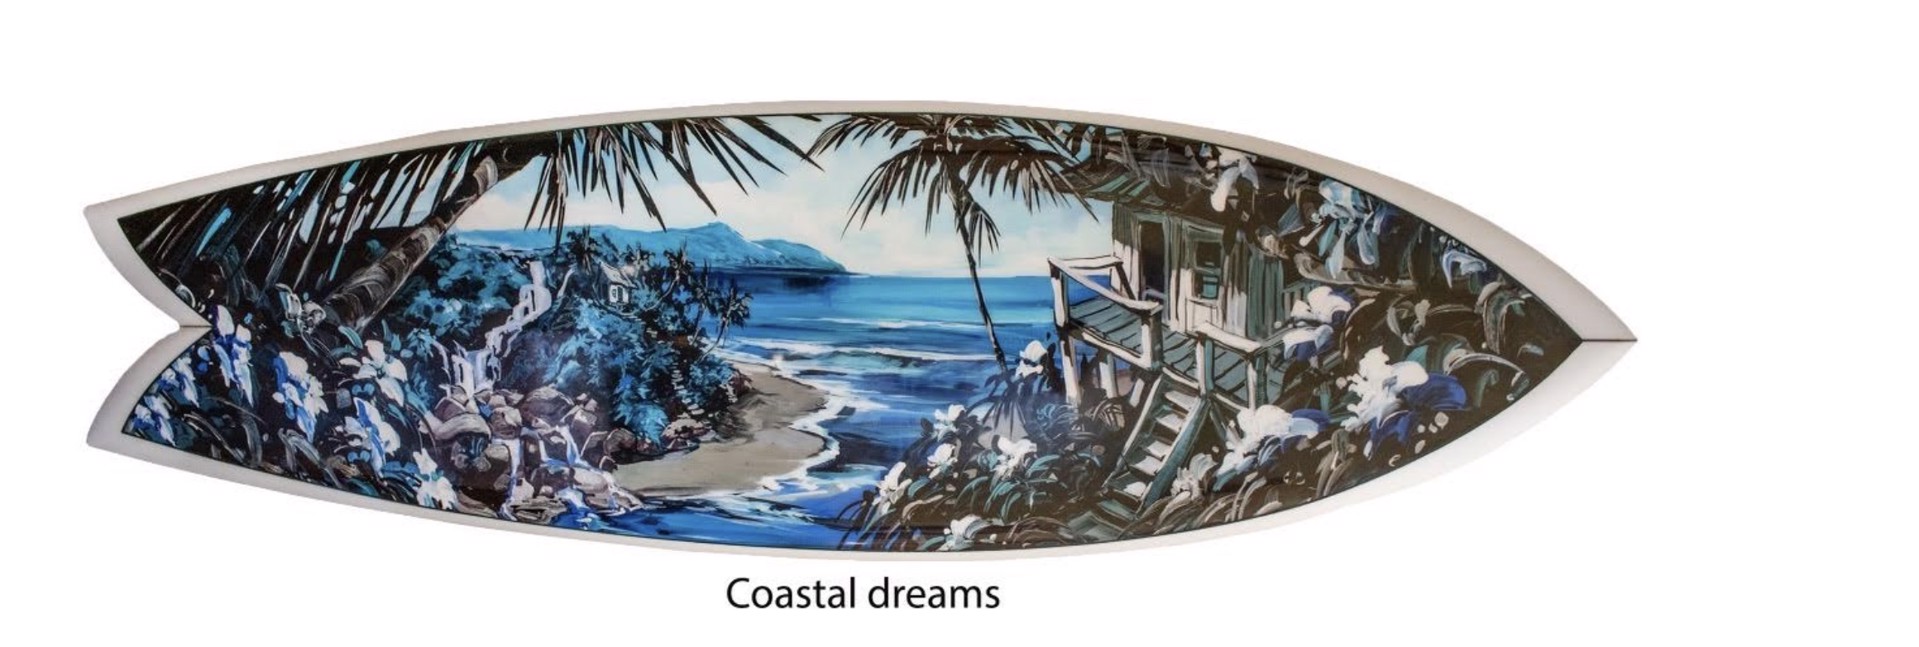 Coastal Dreams by Steve Barton